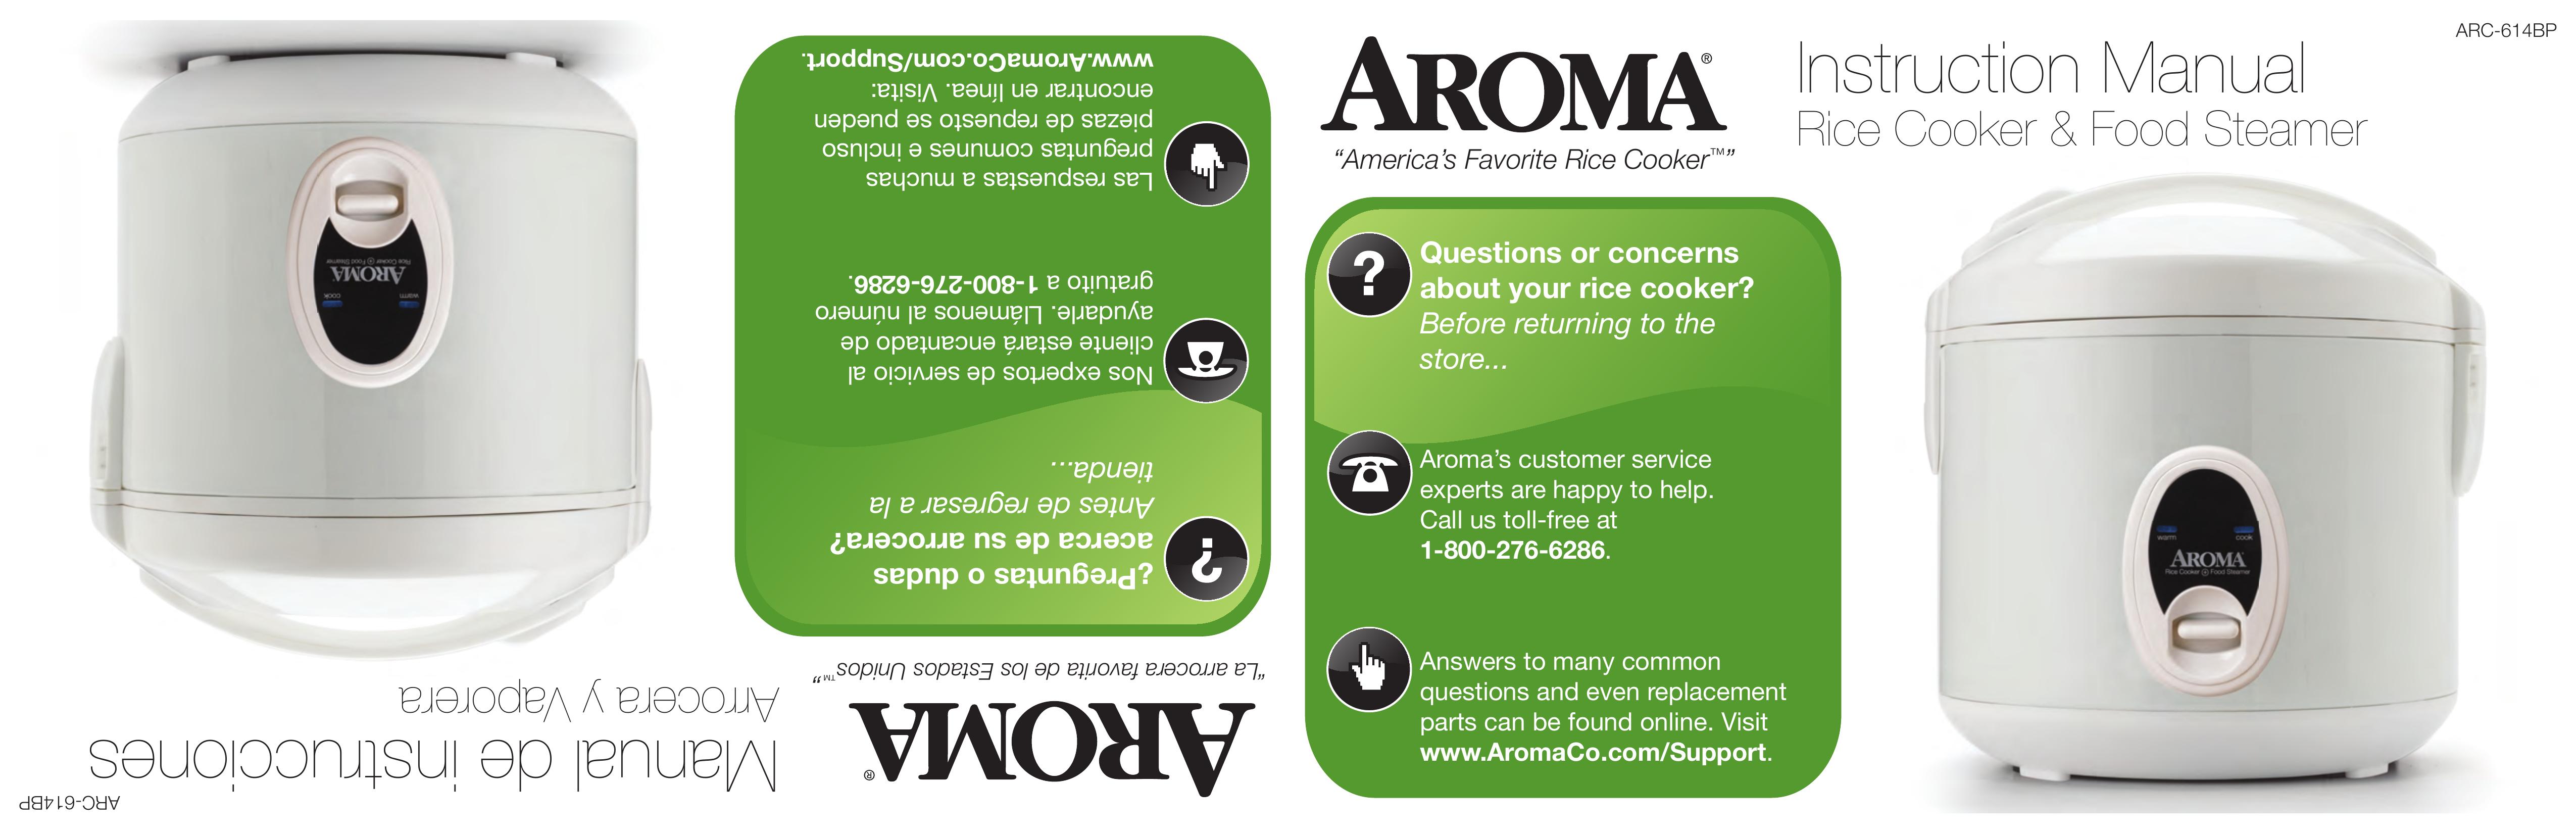 Aroma ARC-614BP Rice Cooker User Manual